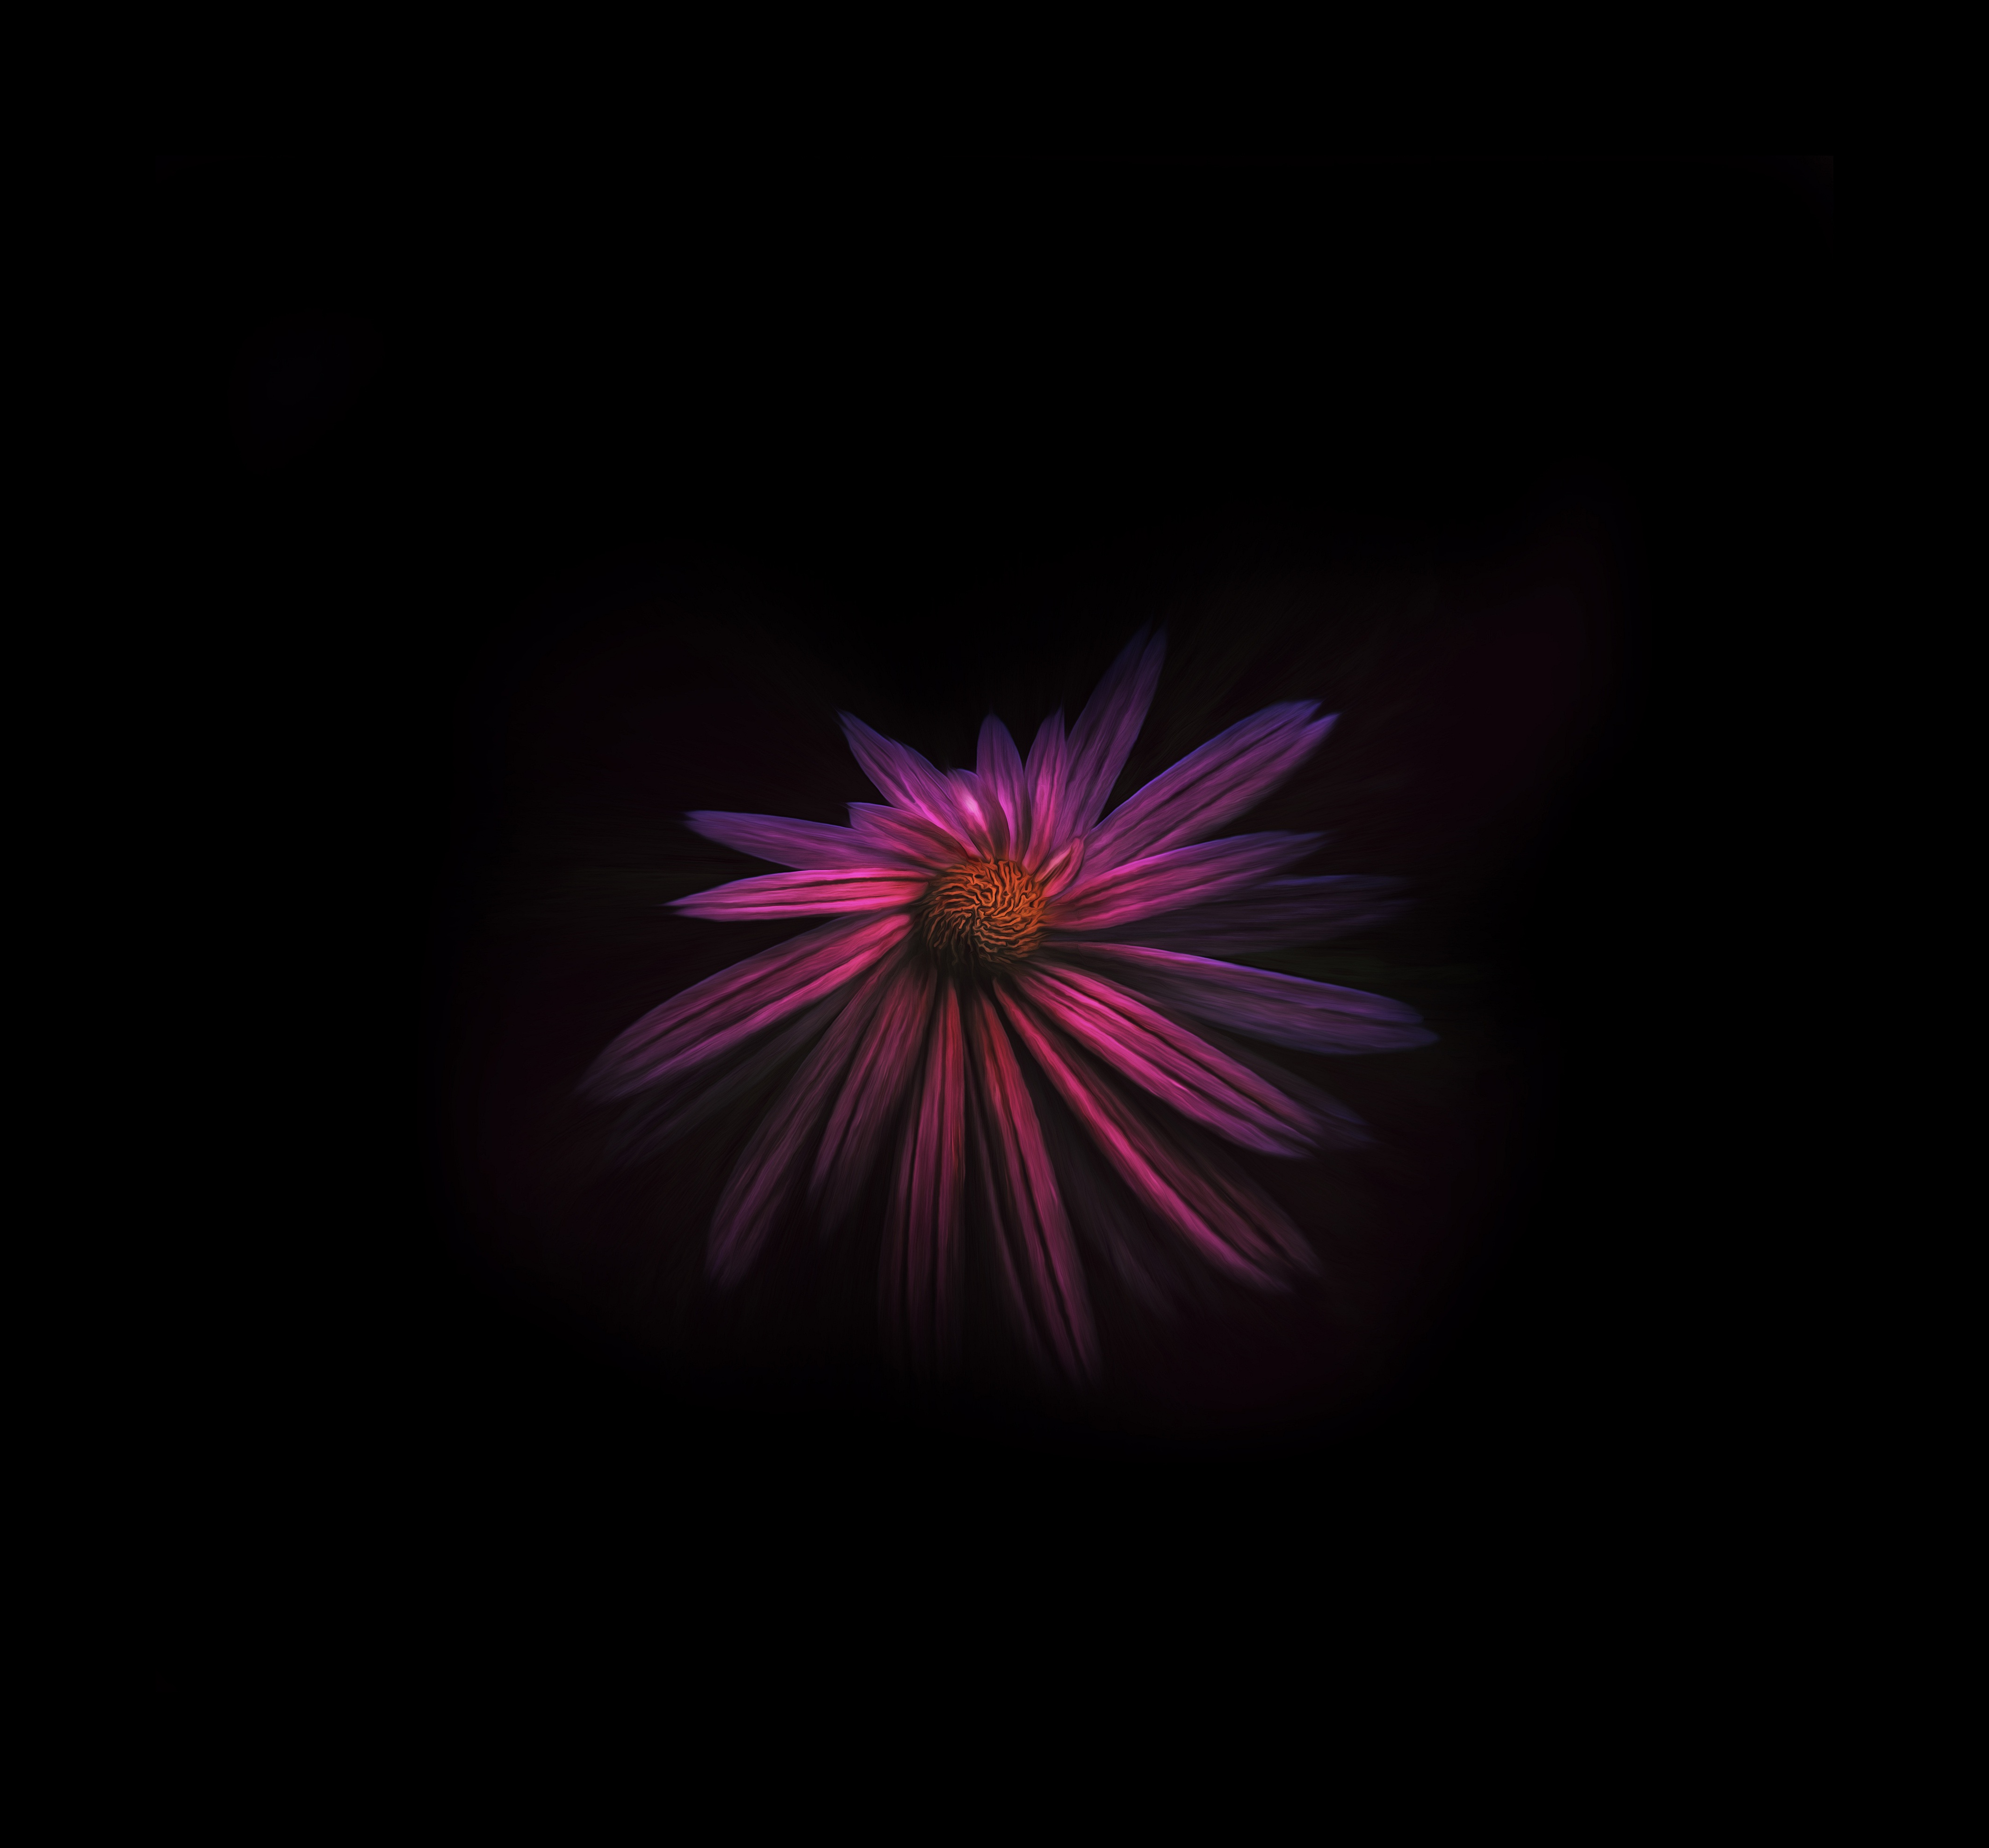 Flower Dark Background 4k, HD Flowers, 4k Wallpapers, Images ...